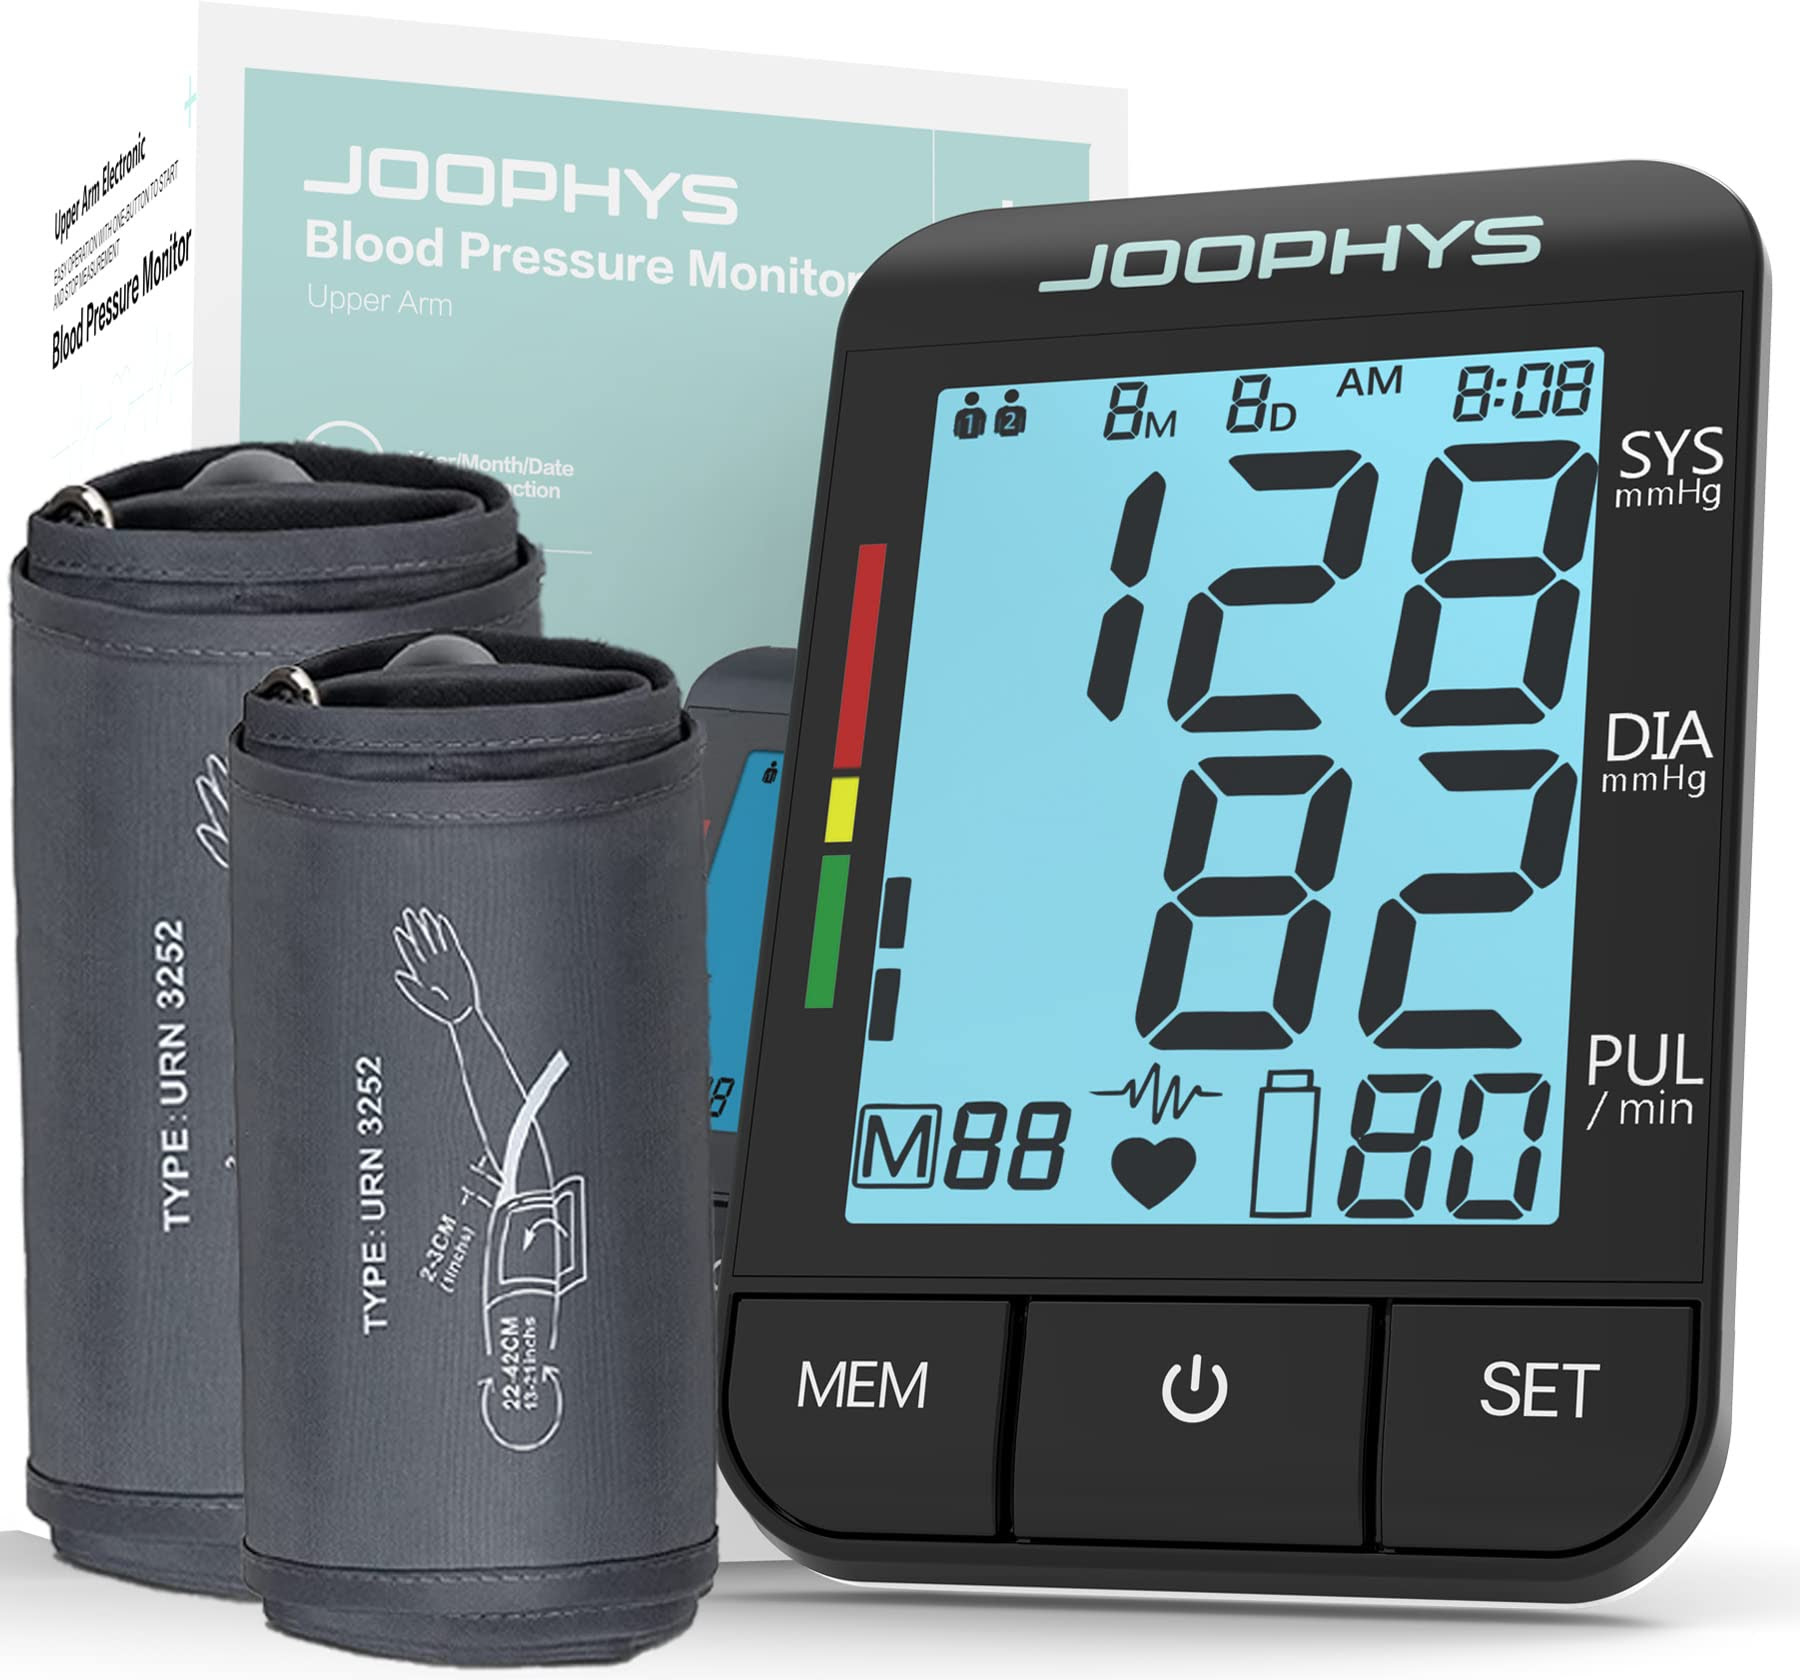 JOOPHYS Blood Pressure Monitor.  1300 units.  EXW New York $9.95 unit.